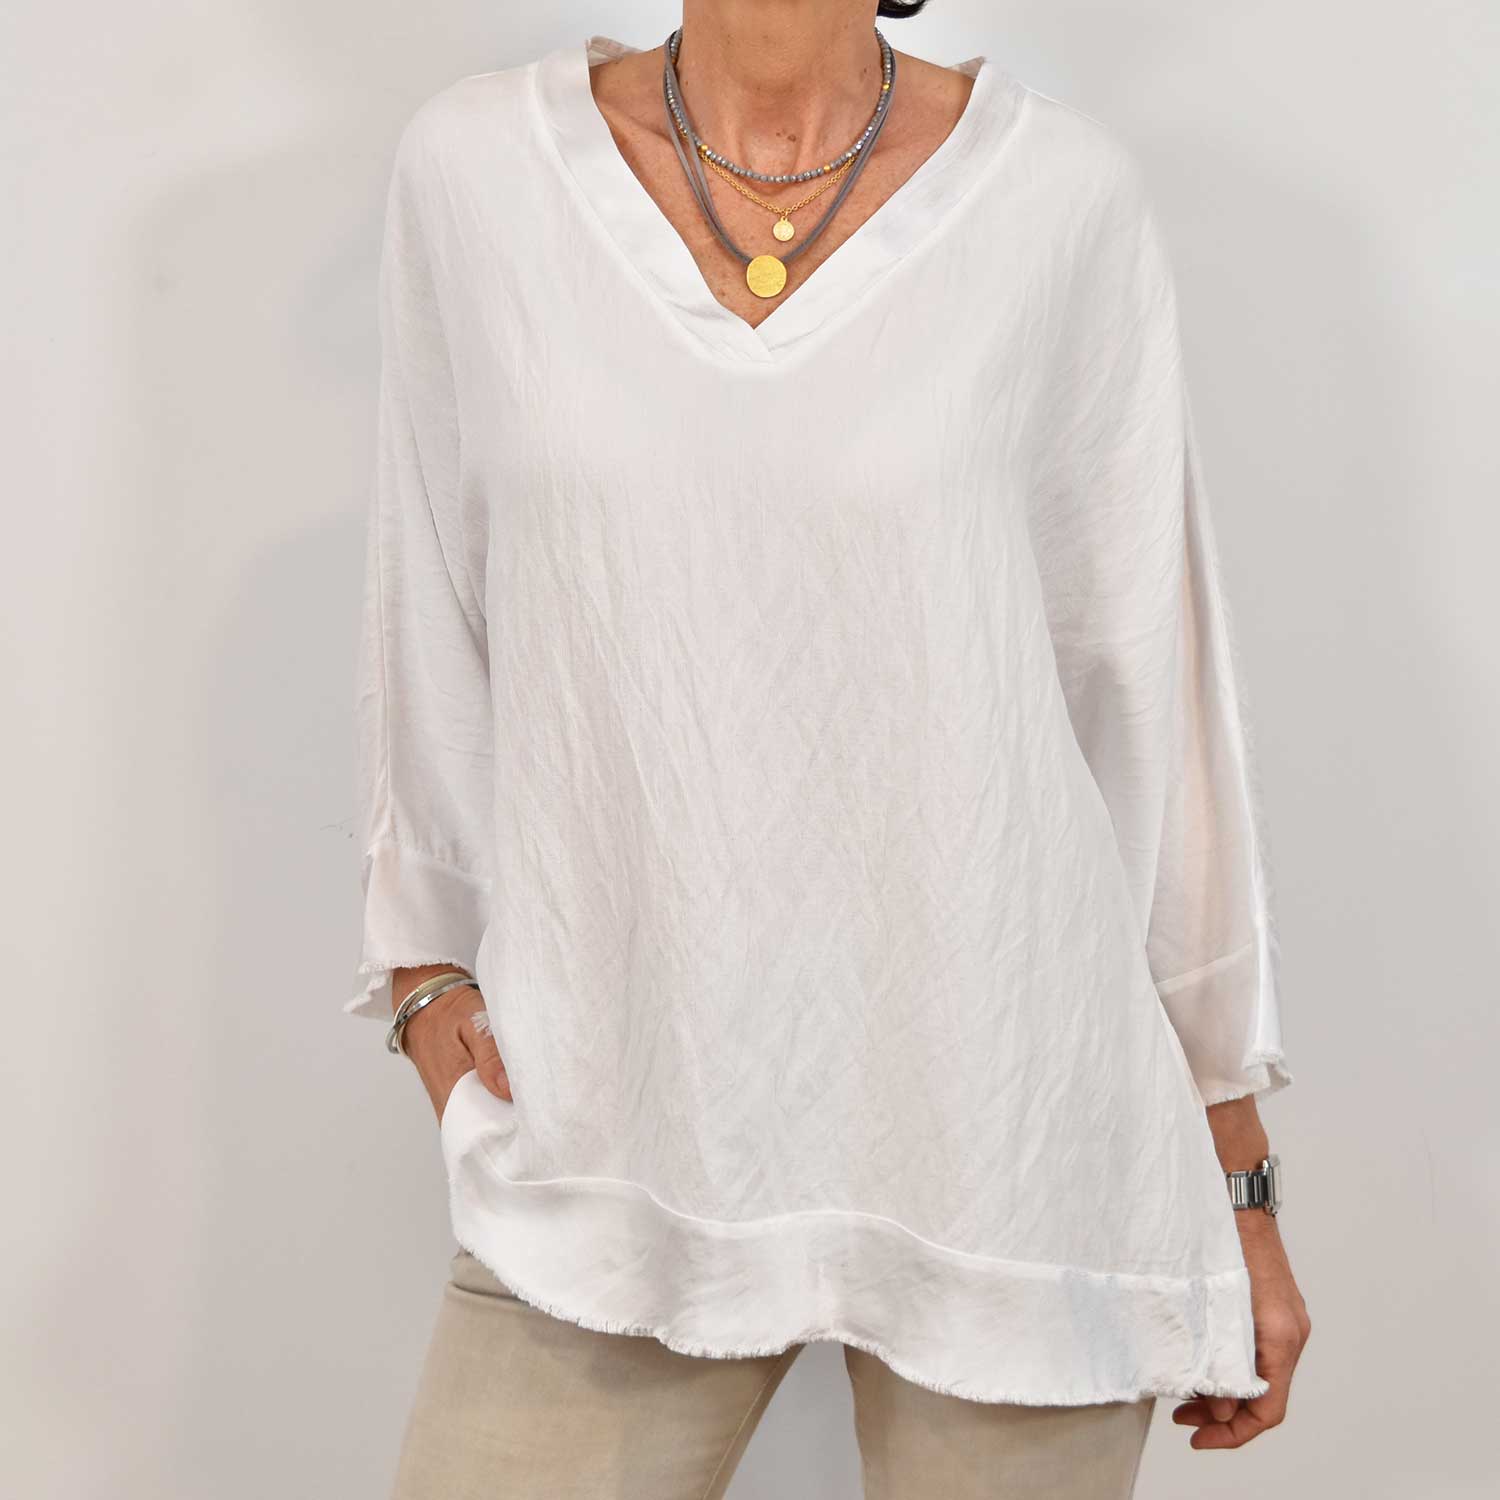 White satin frayed blouse